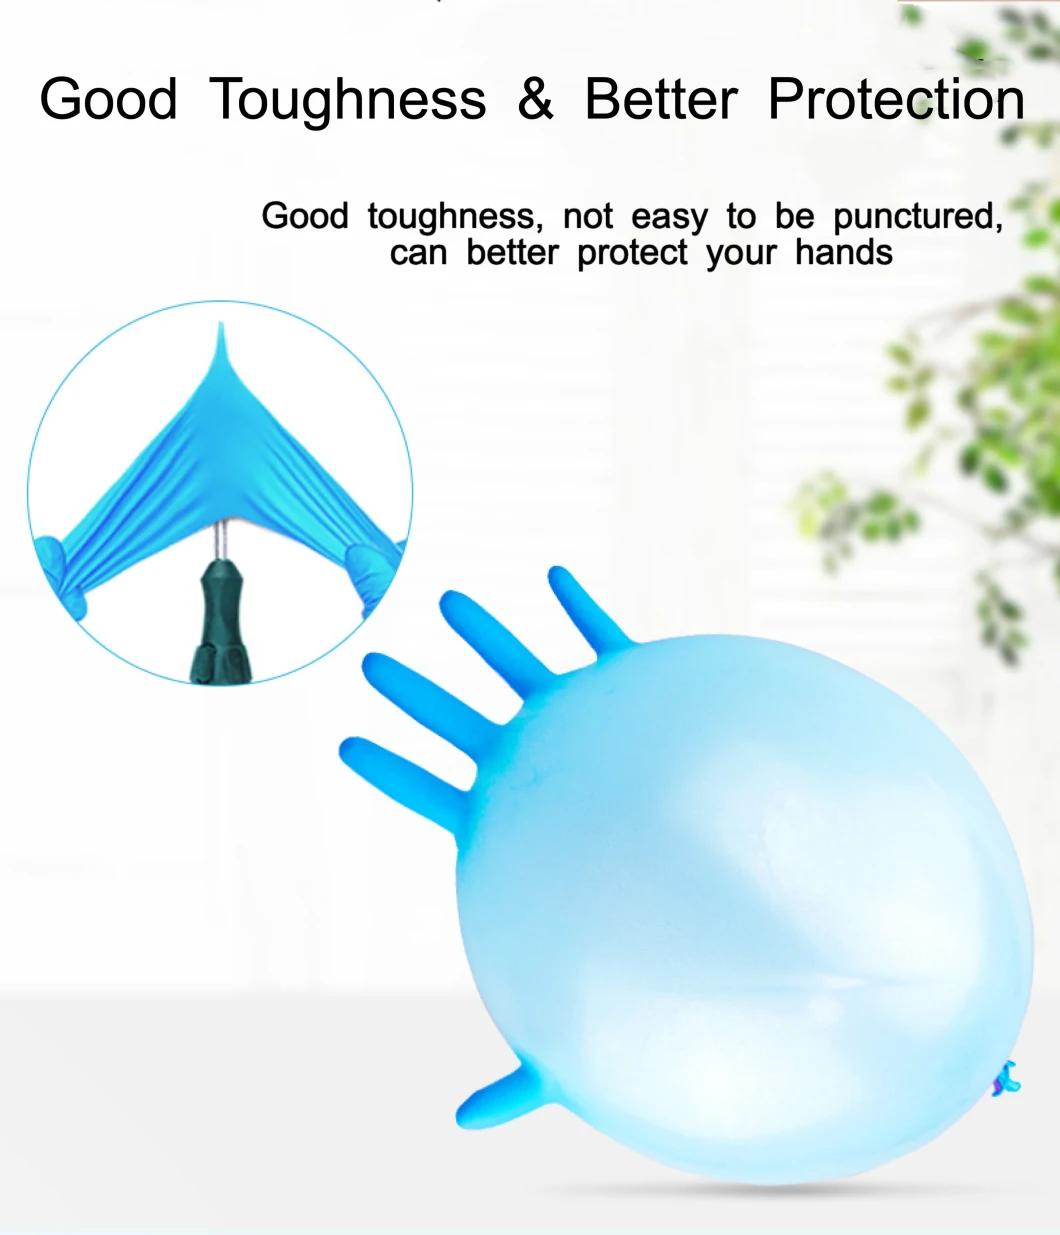 Better Anti-Virus Powder Free FDA CE 510K En455 Disposable Nitrile Examination Gloves